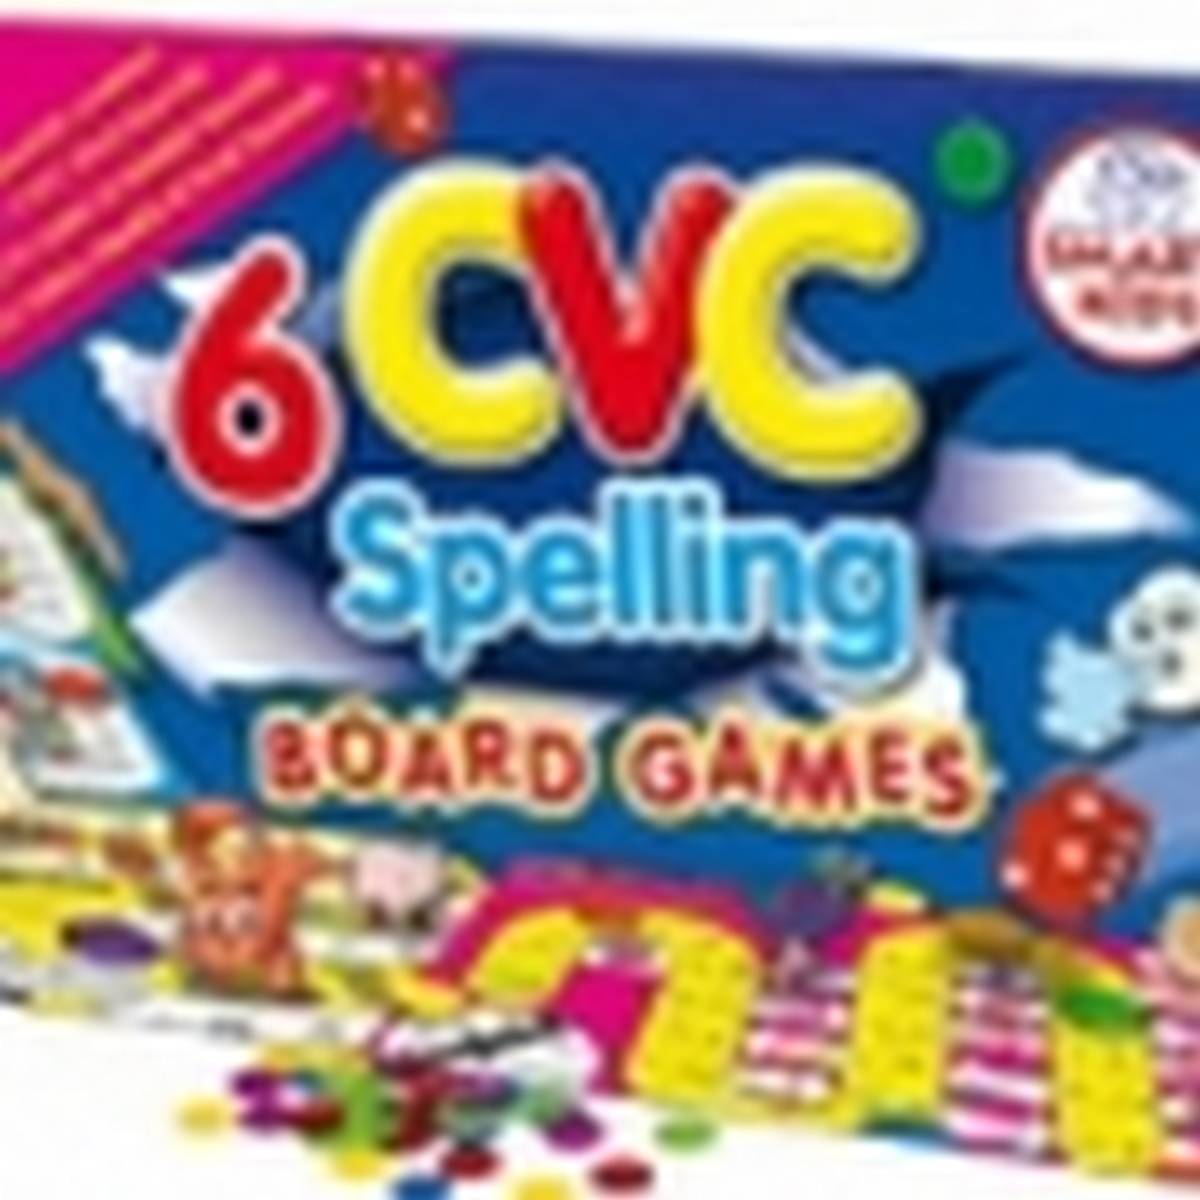 CVC Board Games Set of 6